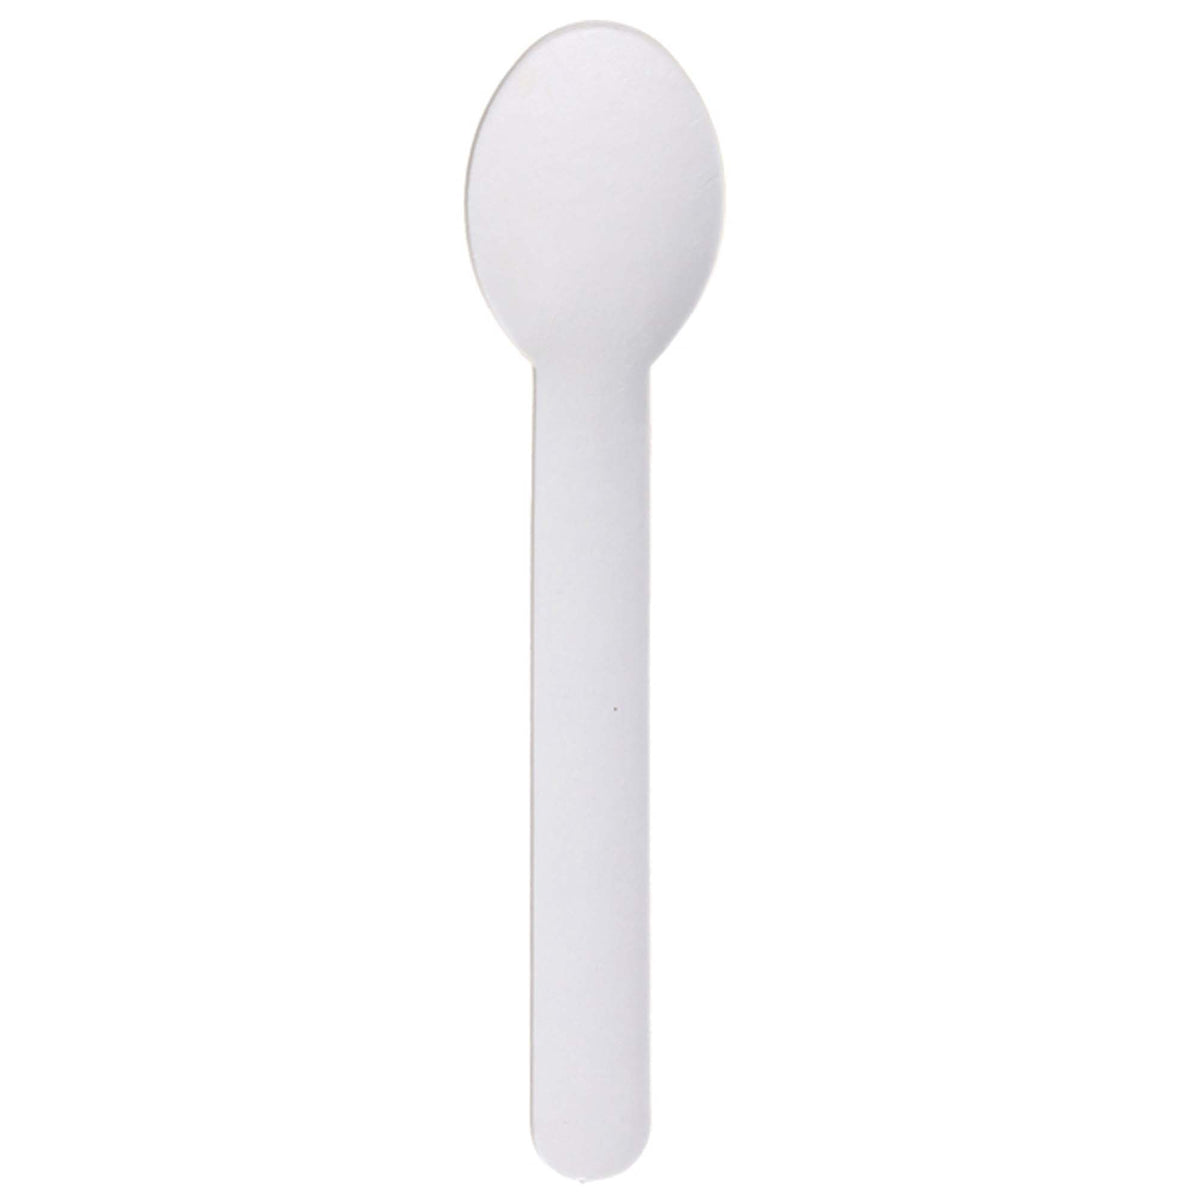 SANTEX Disposable-Plasticware White ECO Paper Spoons, 10 Count 3660380097785